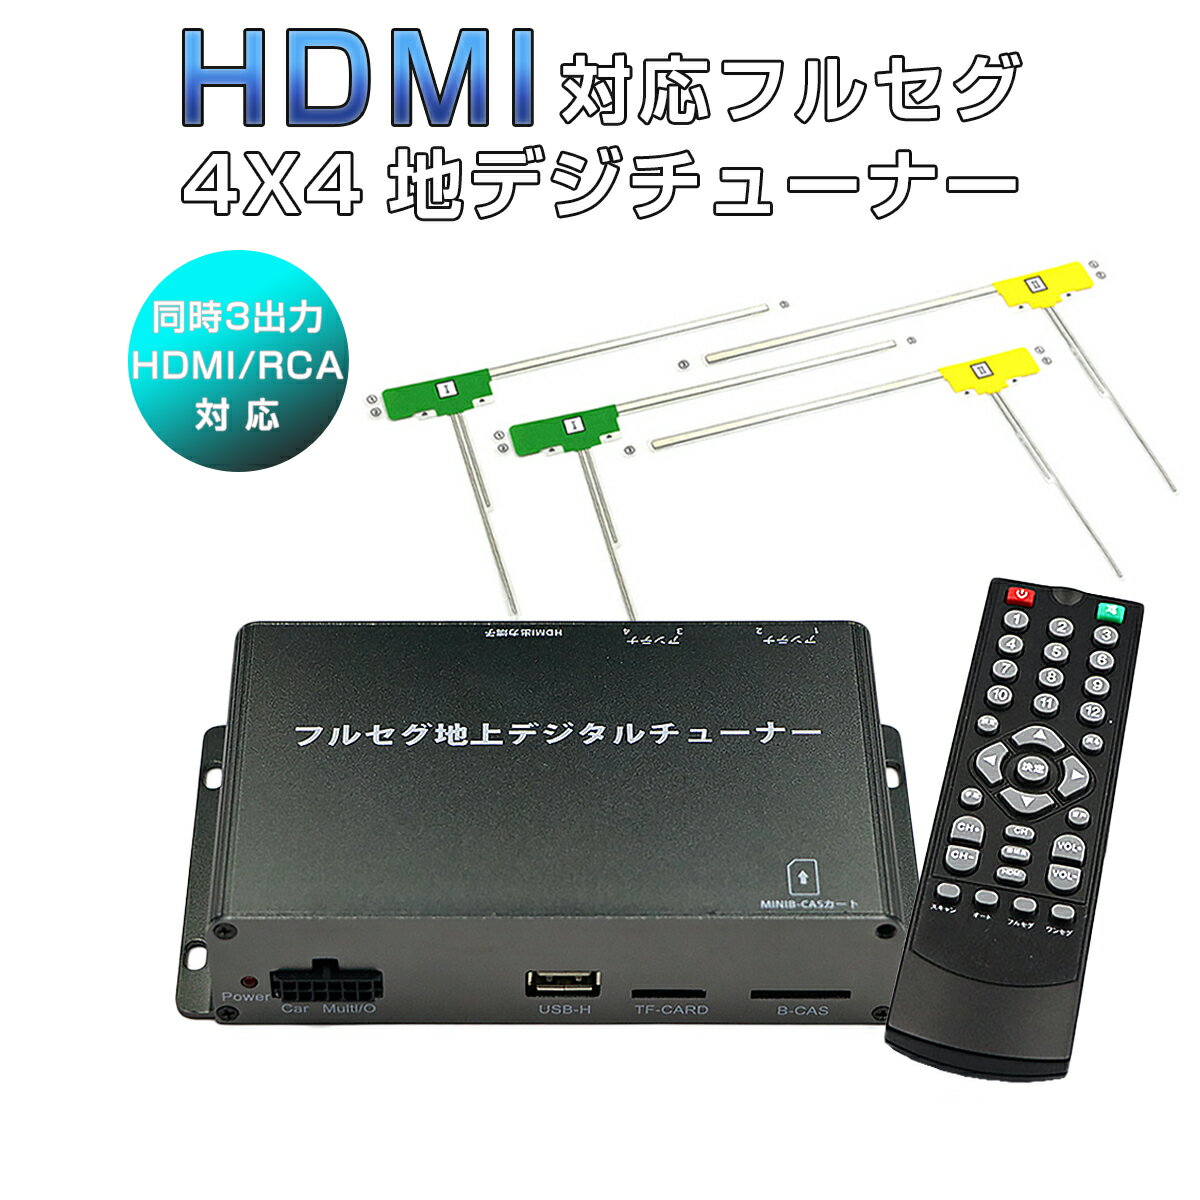 HONDA用の非純正品 コンチェルト 地デジチューナー カーナビ ワンセグ フルセグ HDMI 4x4 高性能 4チューナー 4アンテナ 高画質 自動切換 150km/hまで受信 古い車載TVやカーナビにも使える 12V/24V フィルムアンテナ miniB-CASカード付き 6ヶ月保証